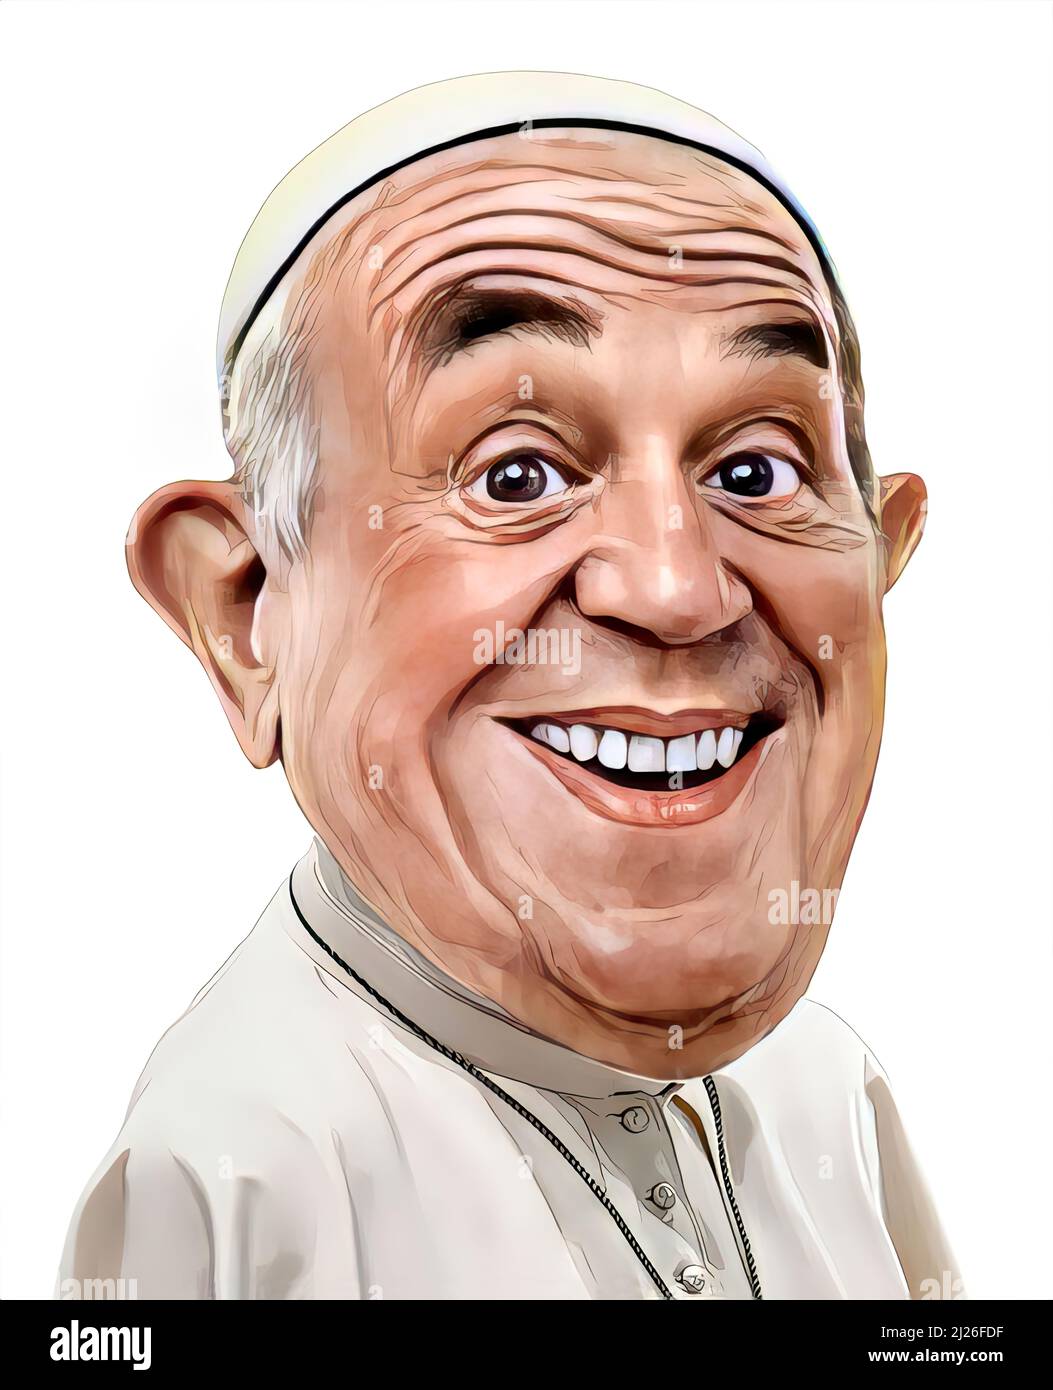 Papa Francesco, Jorge Mario Bergoglio, volto caricaturale, fumetto, cartone  animato, sorridente Foto stock - Alamy